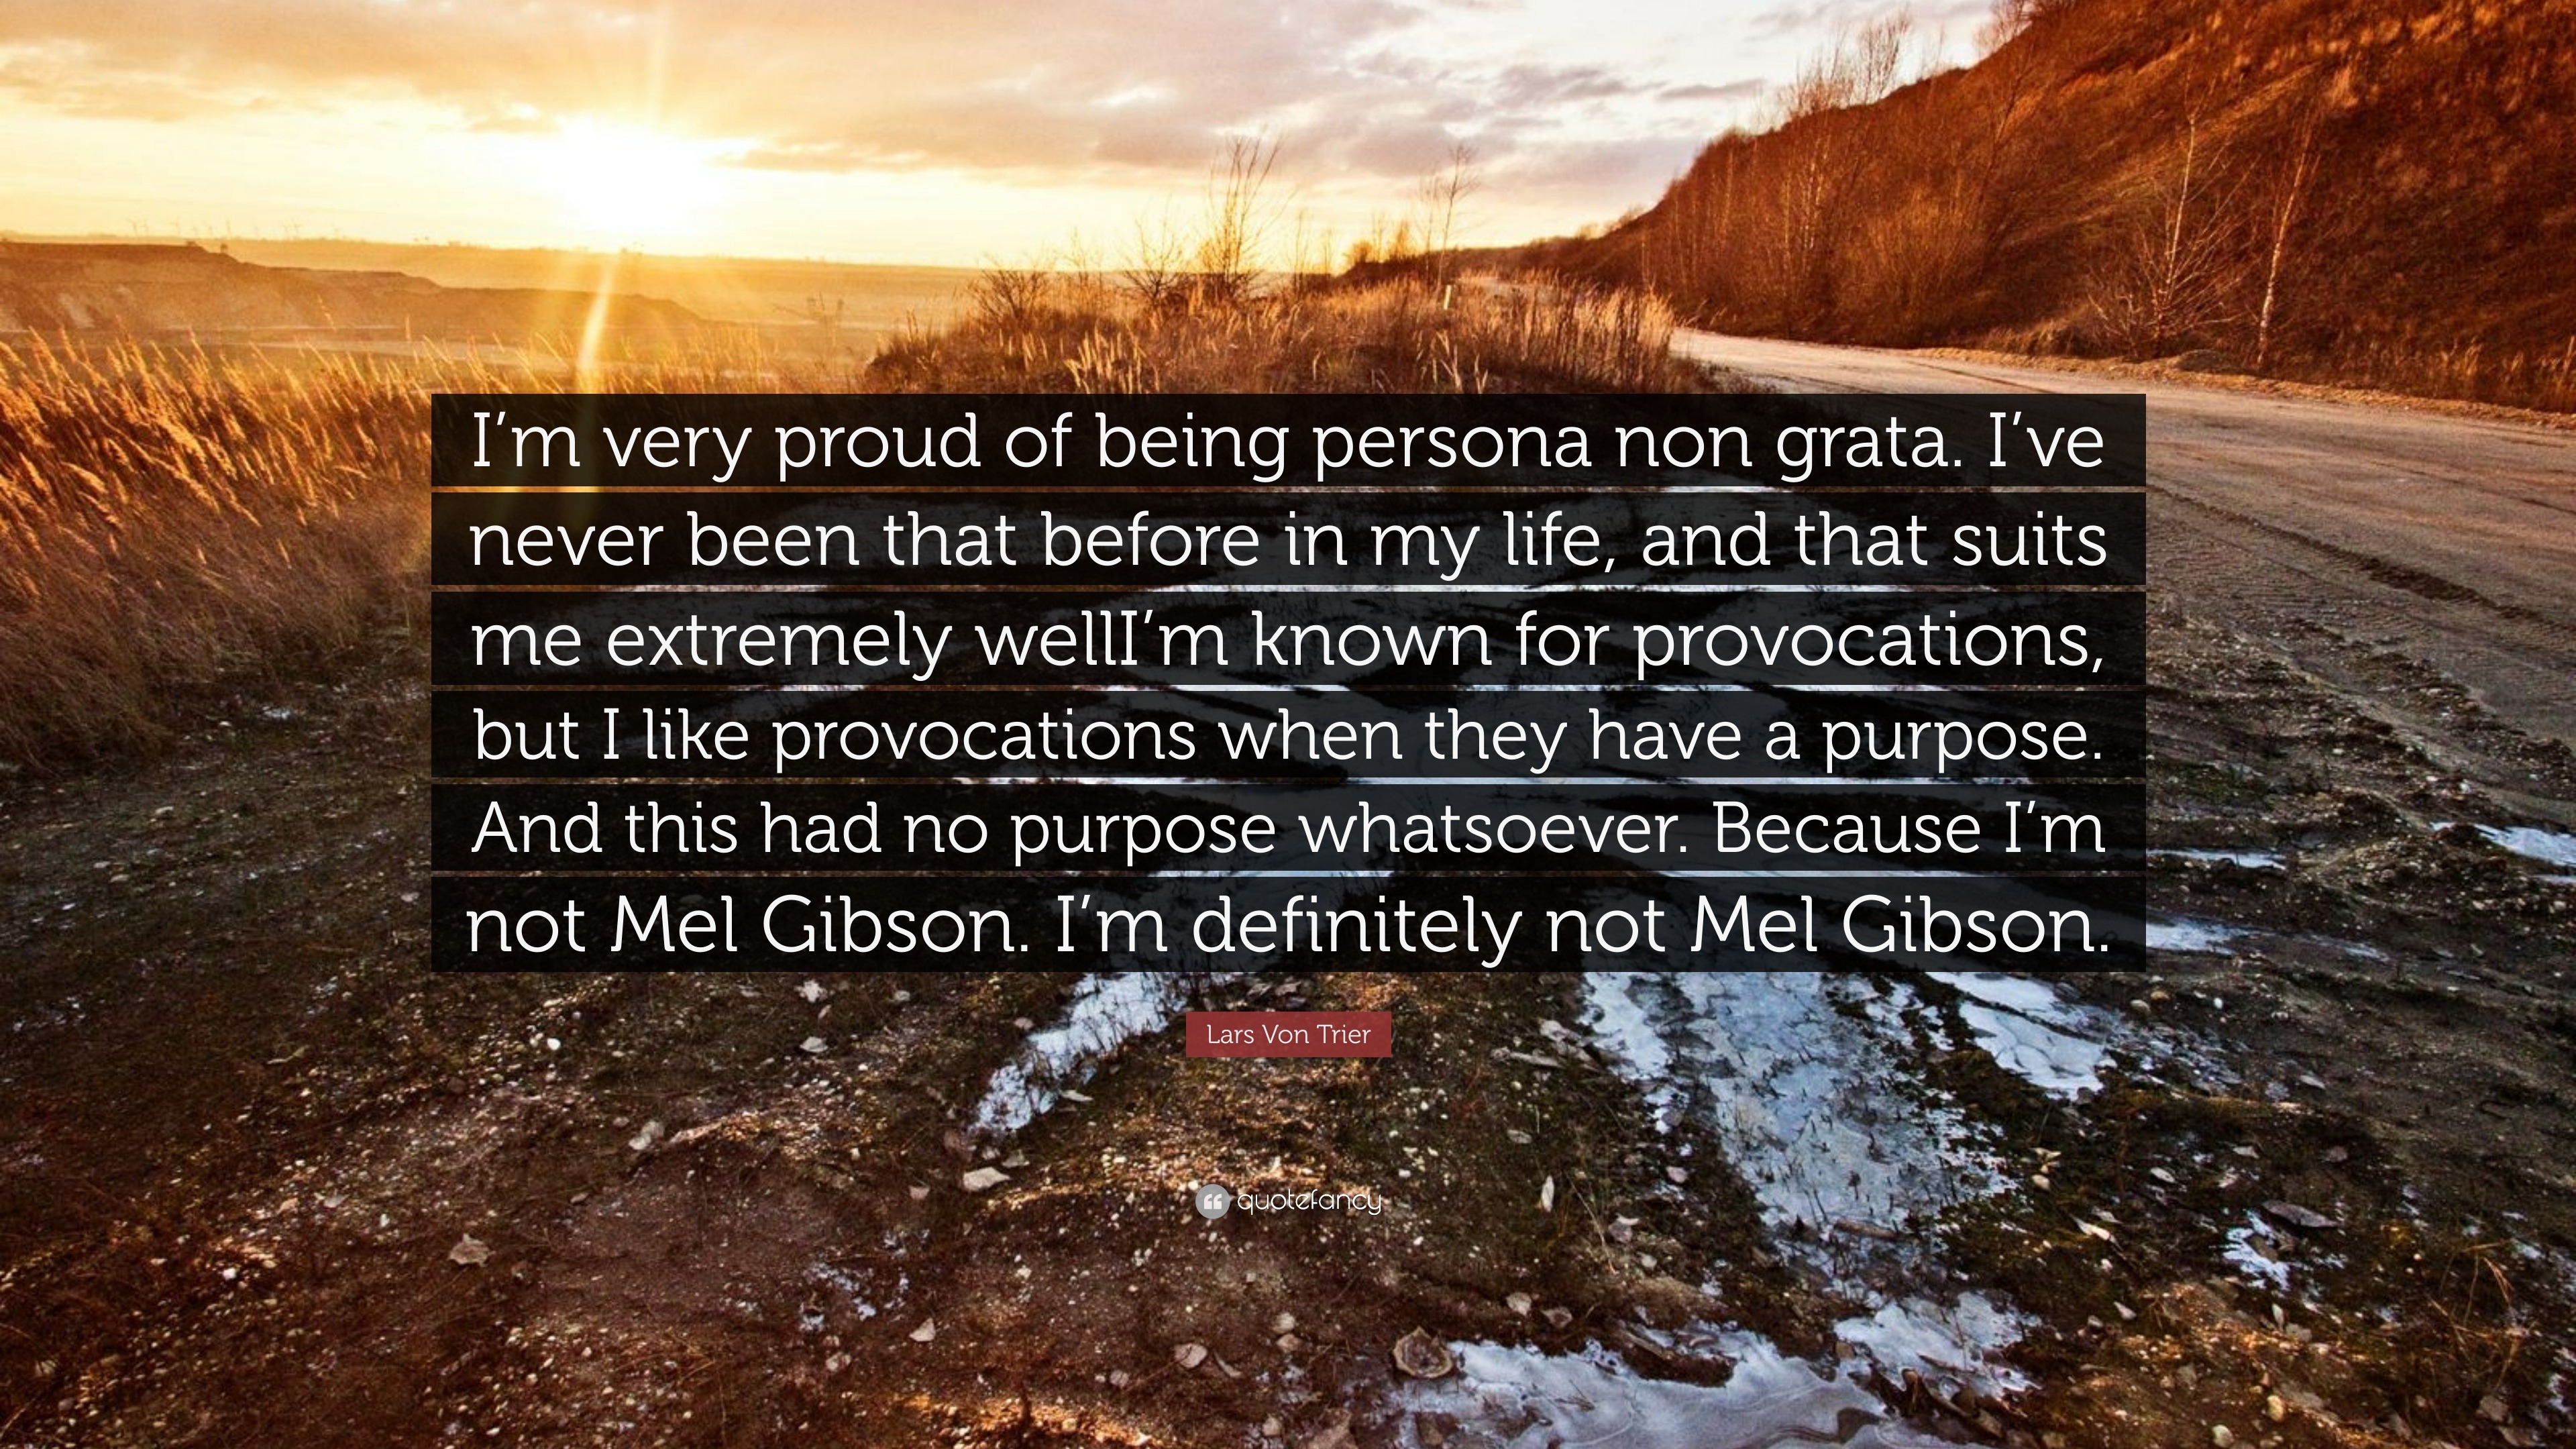 Lars Von Trier Quote: “I'm very proud of being persona non grata